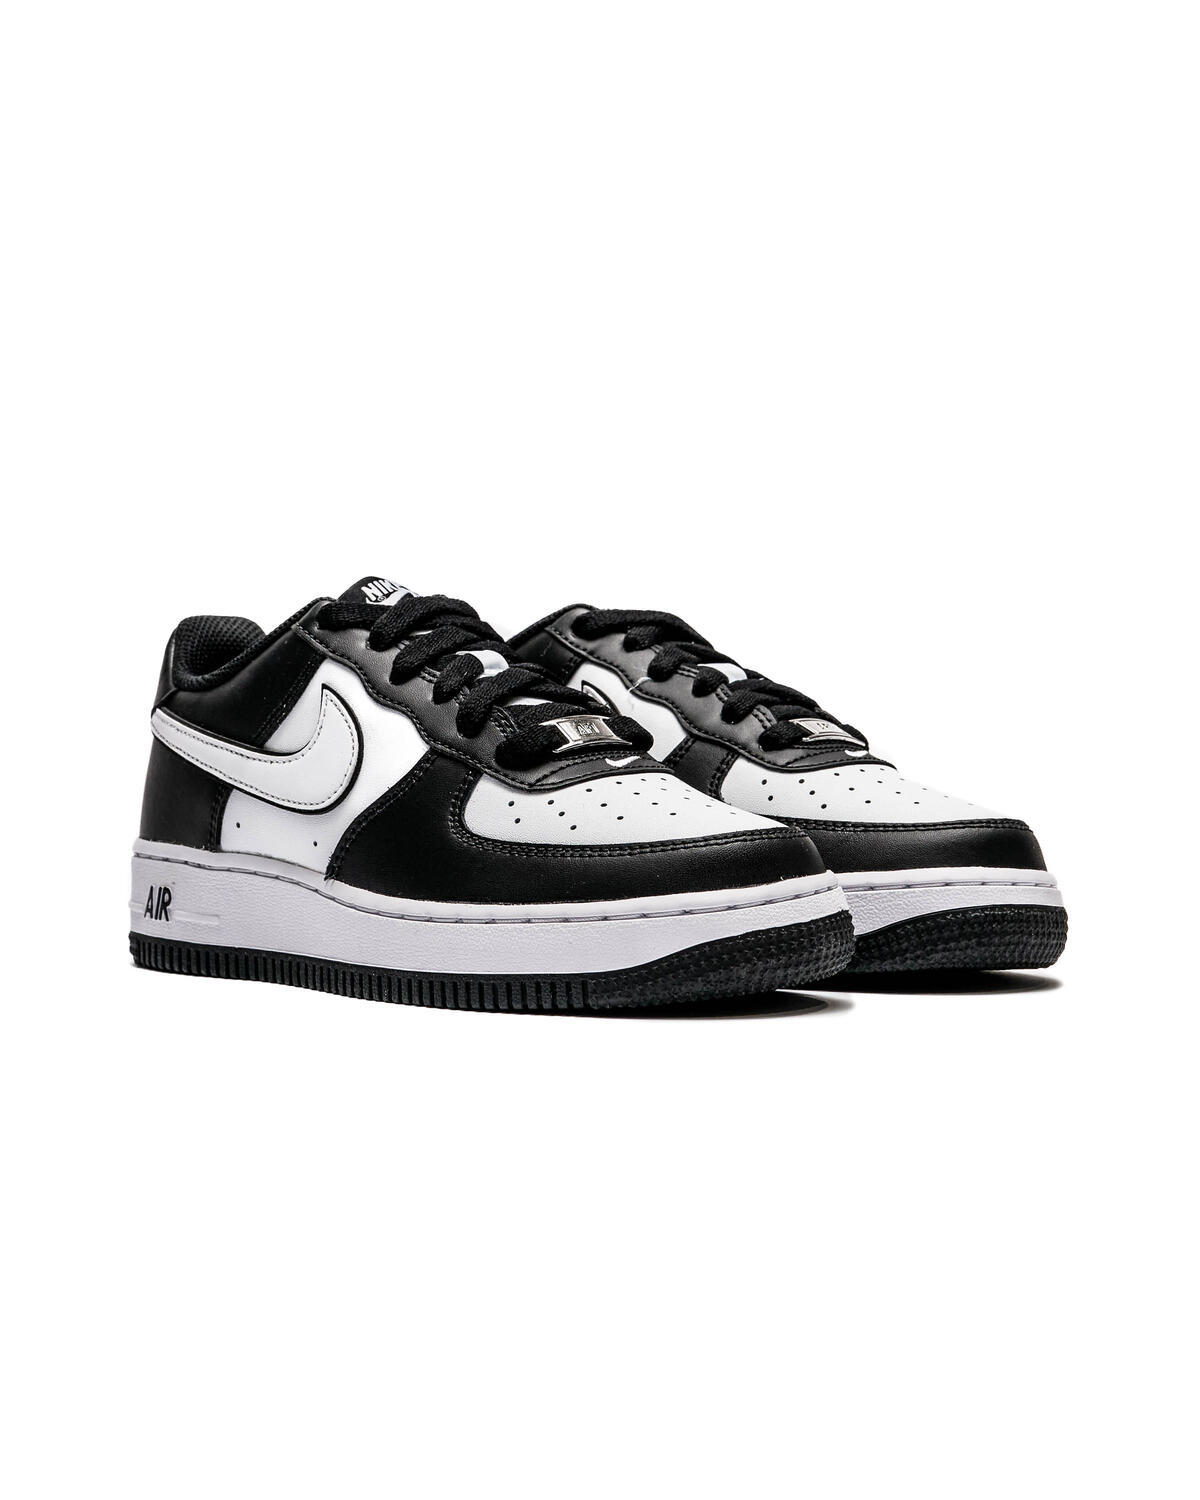 Nike Air Force 1 LV8 2 Black/White Grade School Kids' Shoe